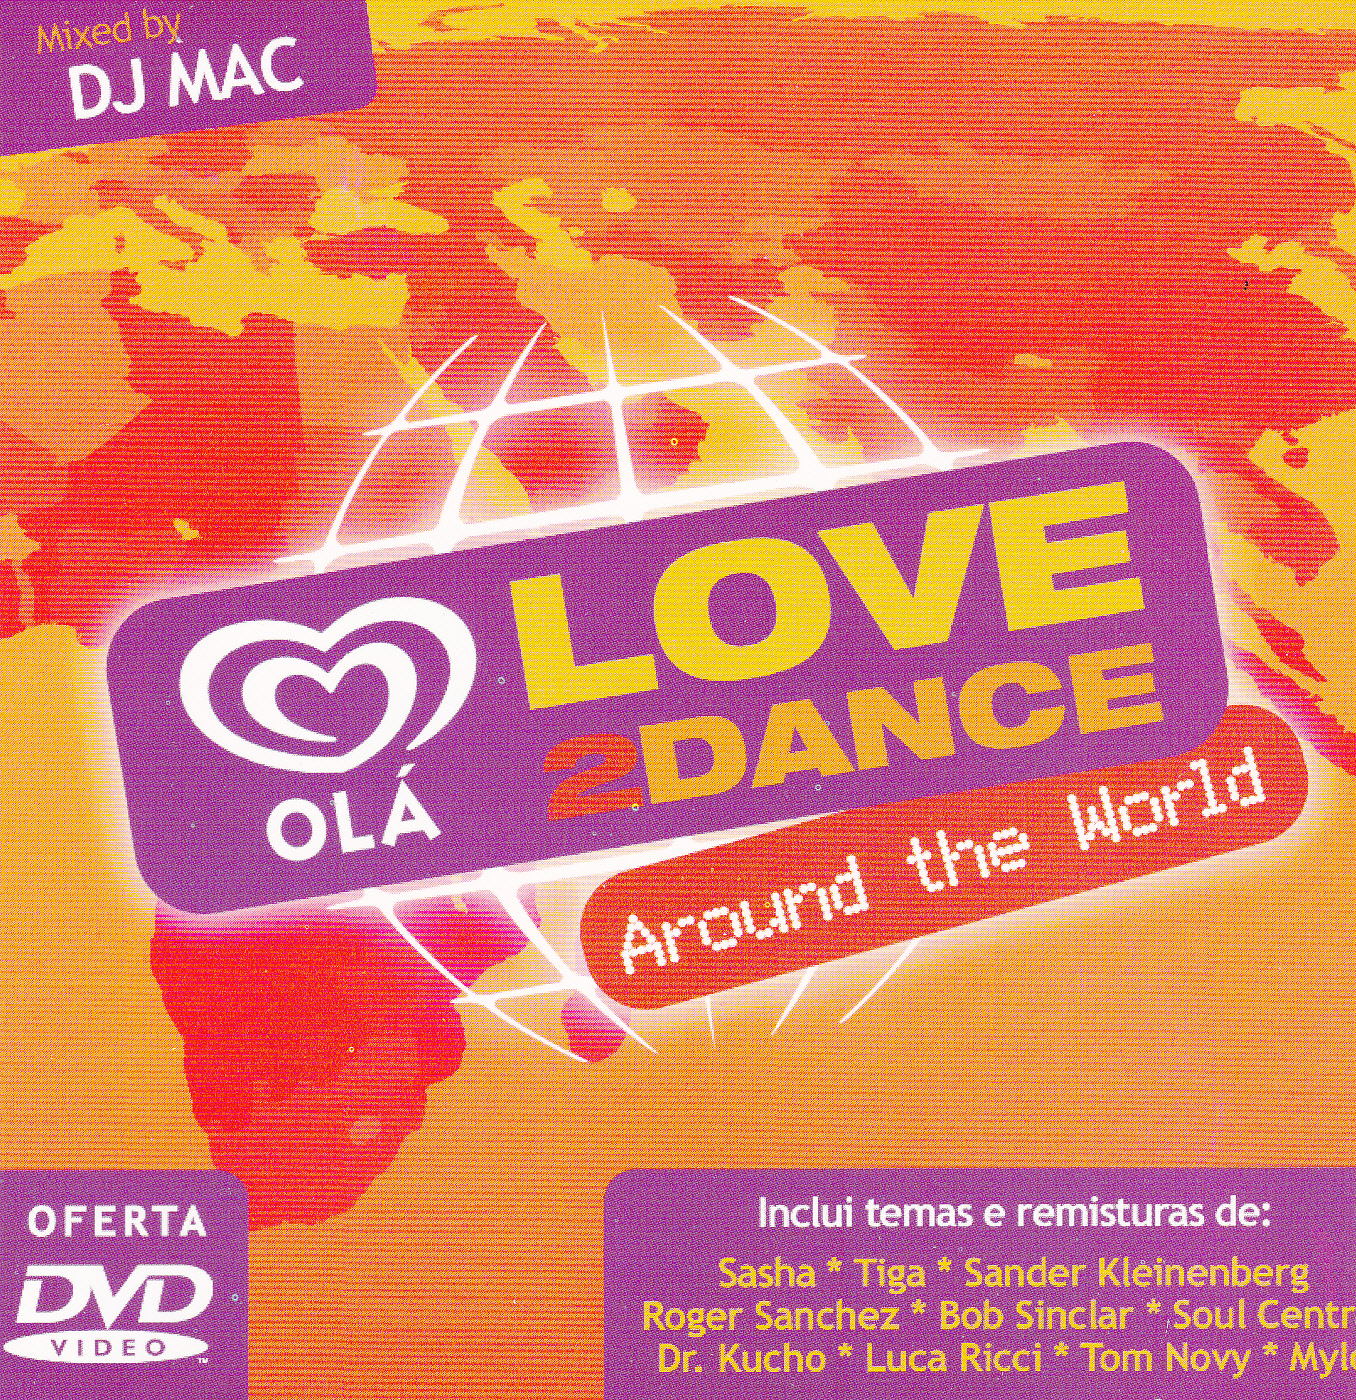 Olá Love 2 Dance - Around The World